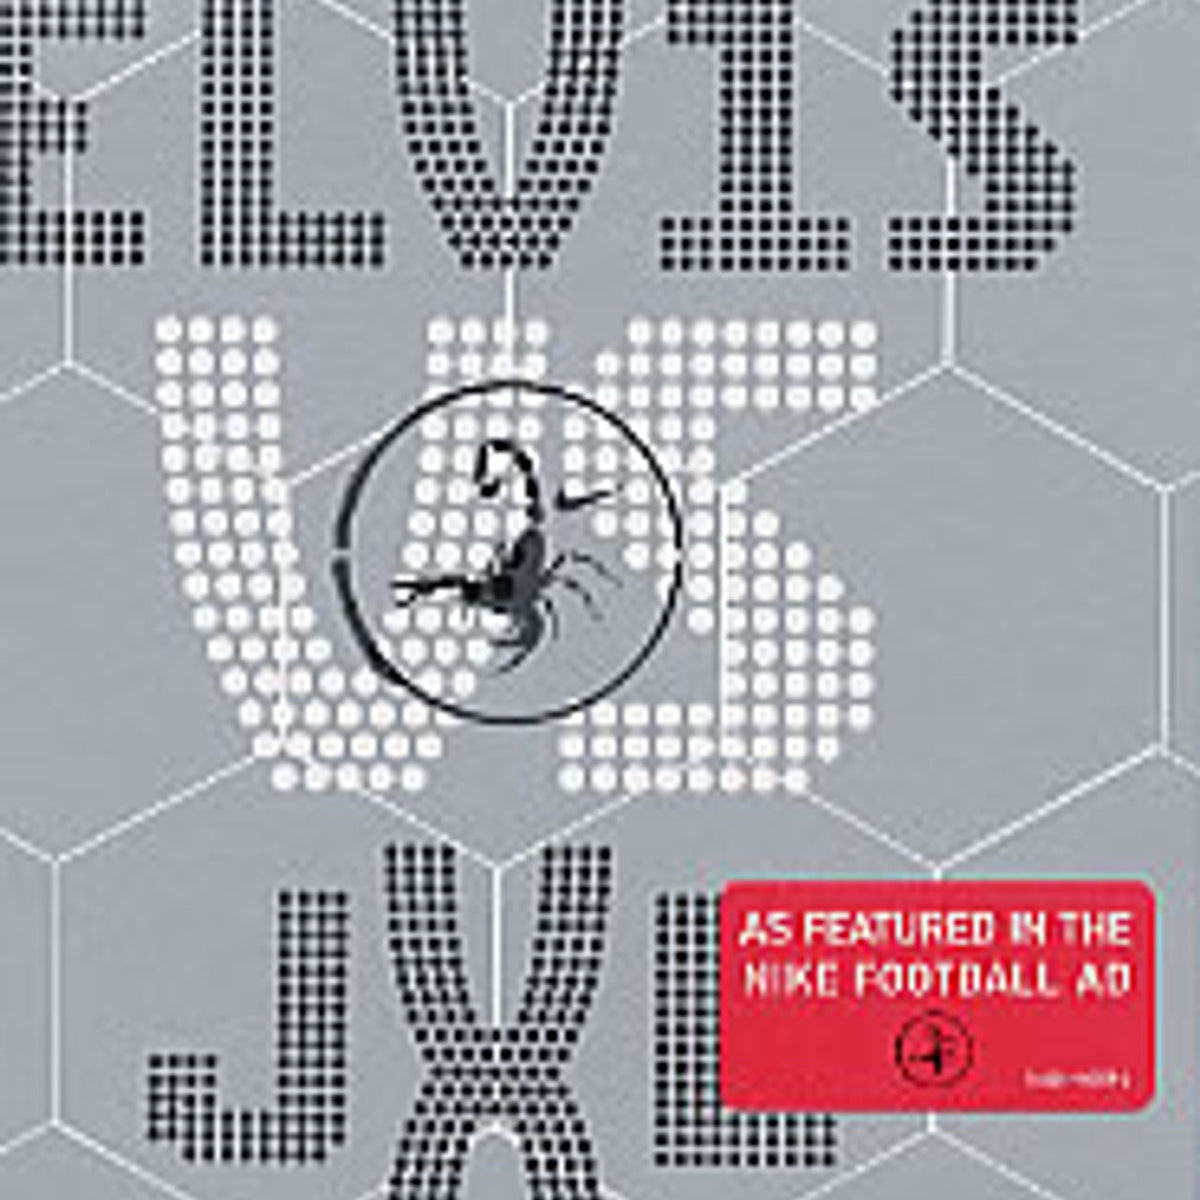 Elvis Presley A Little Less Conversation CD single — RareVinyl.com